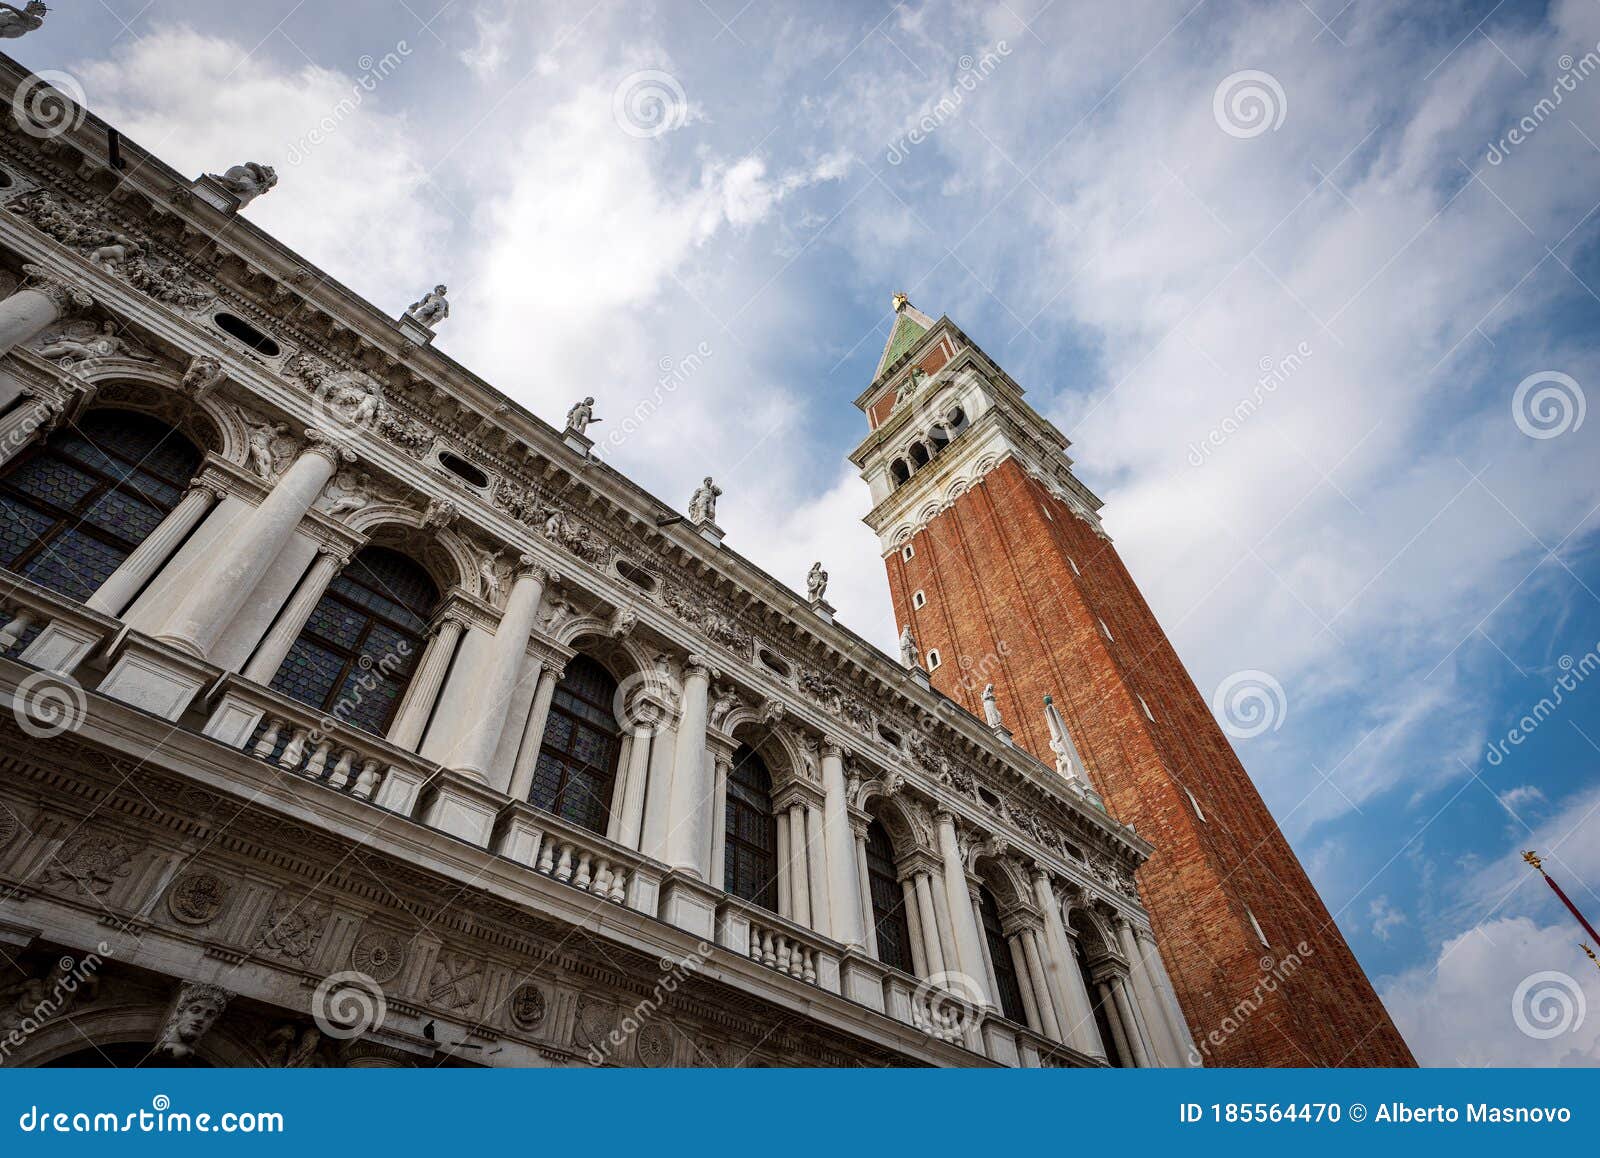 campanile of san marco and biblioteca nazionale marciana - venice italy